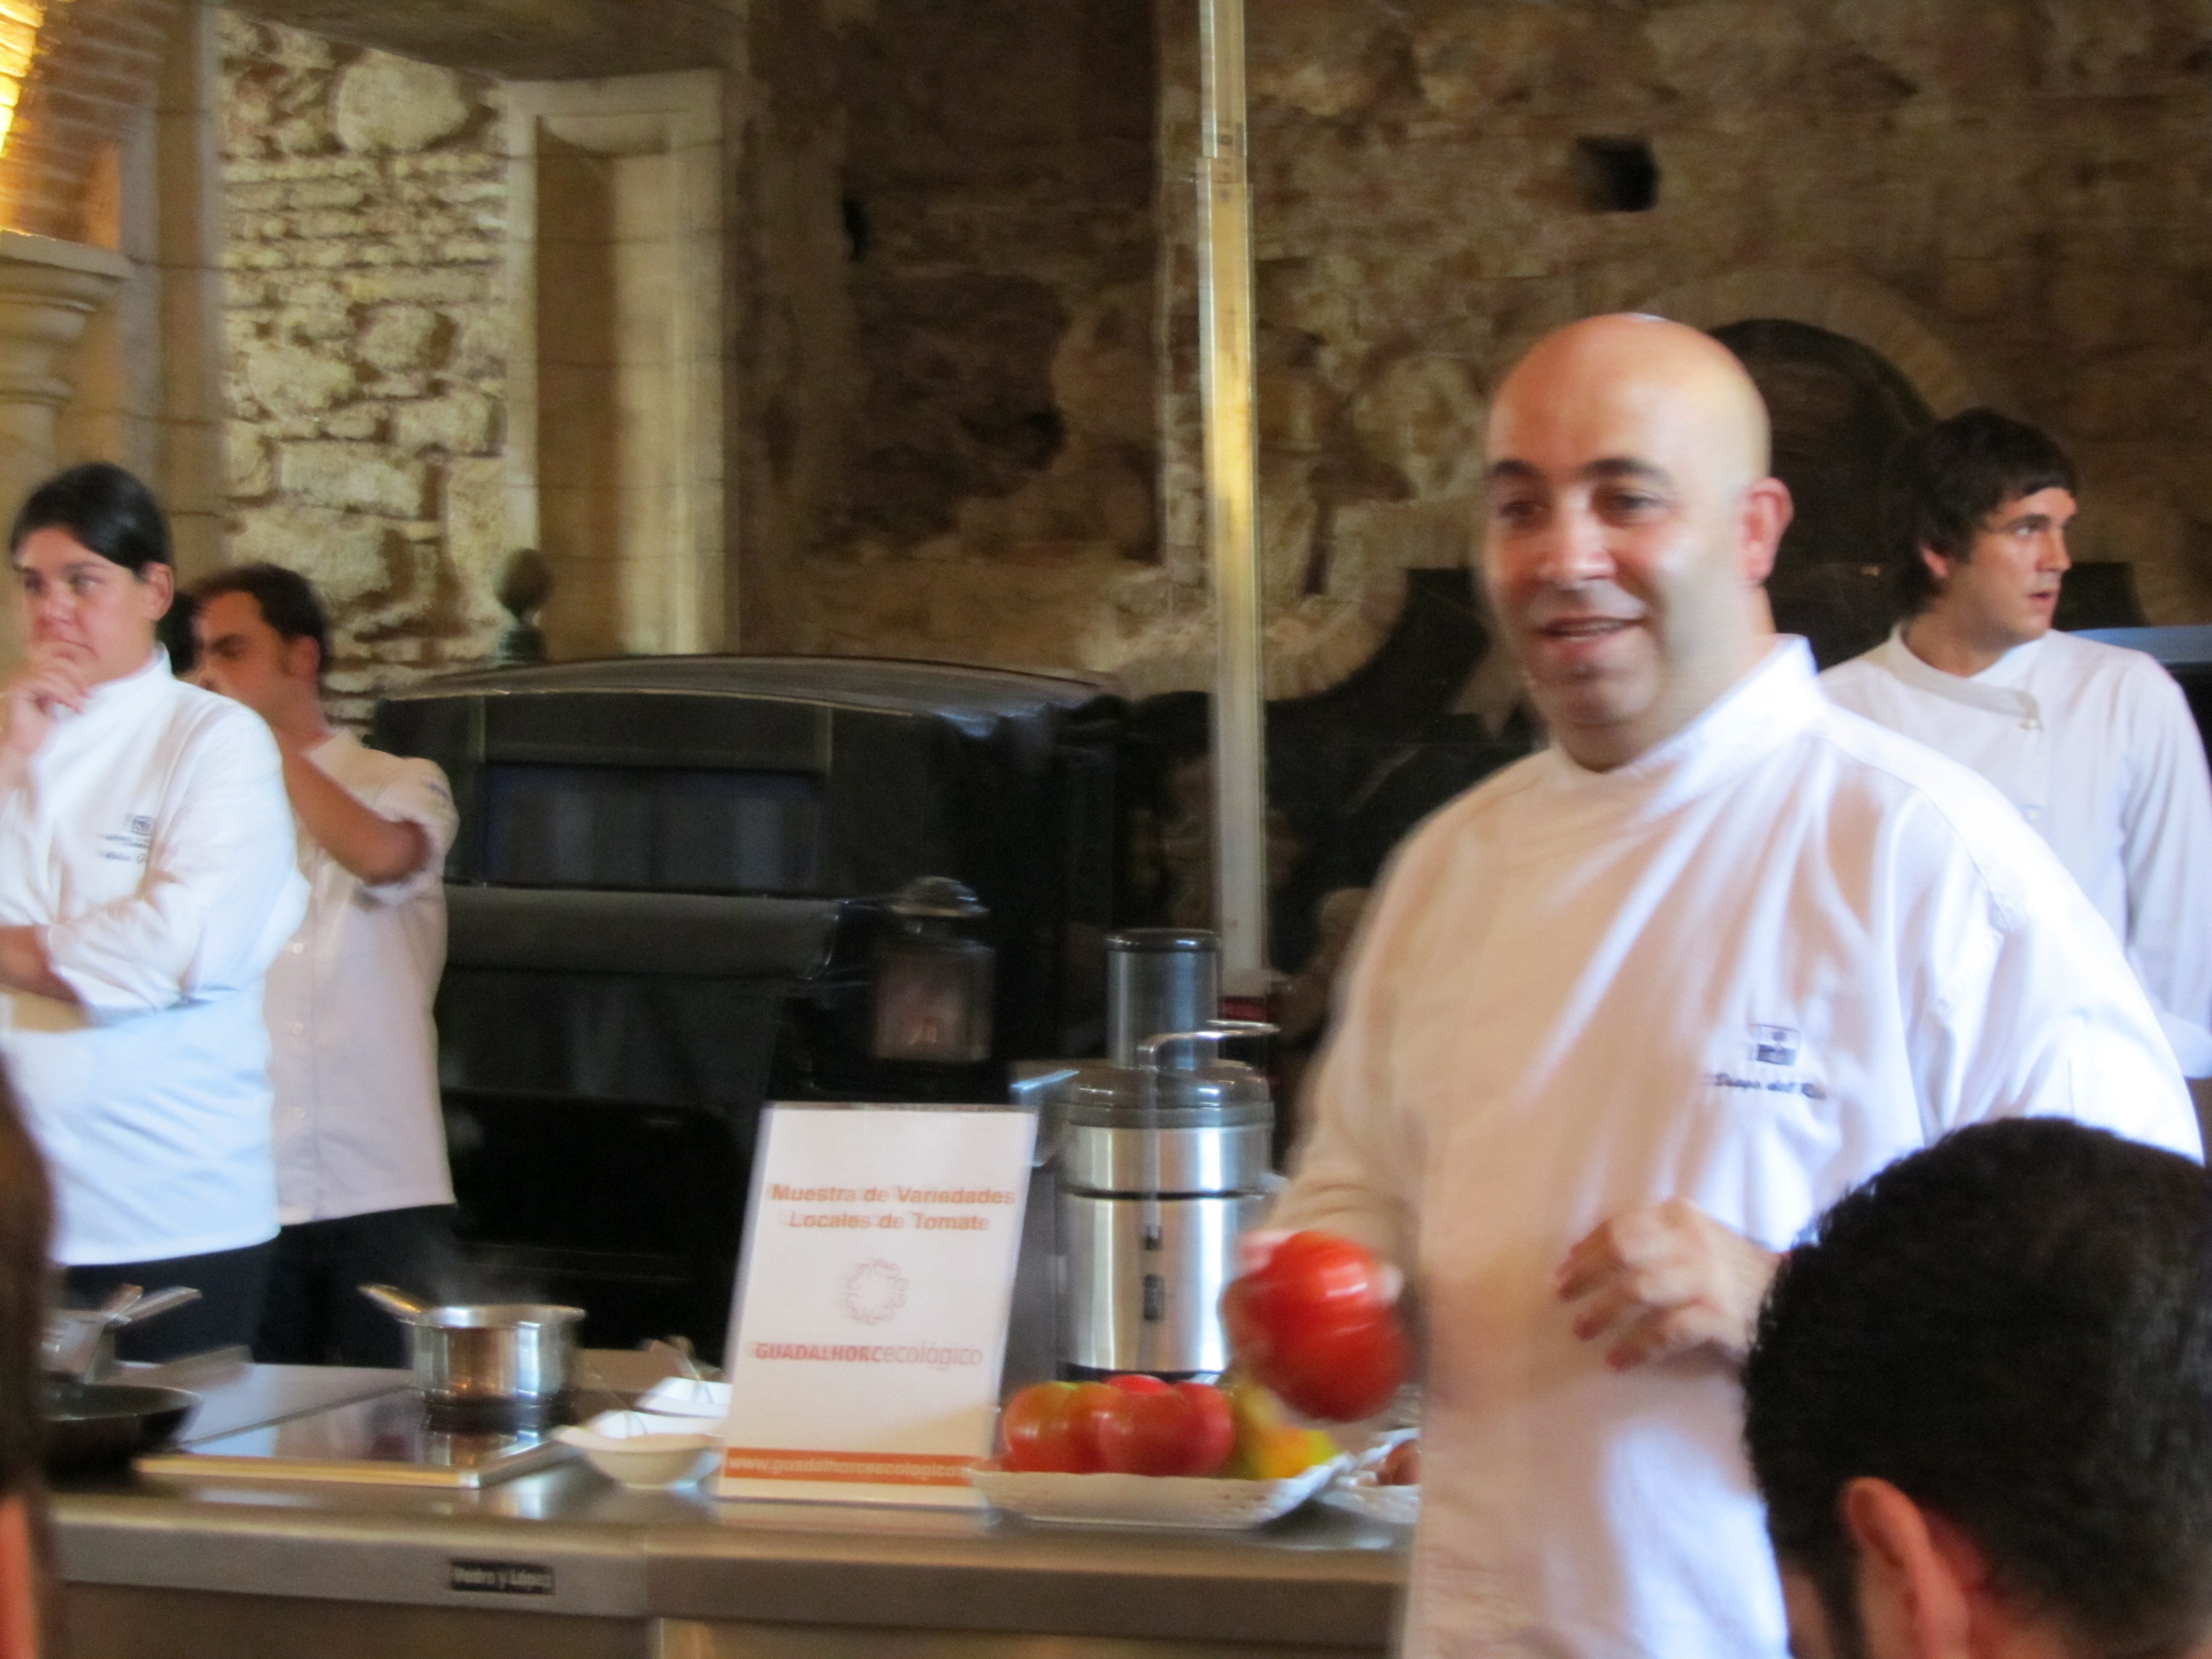 La alta cocina andaluza disfruta de la variedad de tomates del Guadalhorce